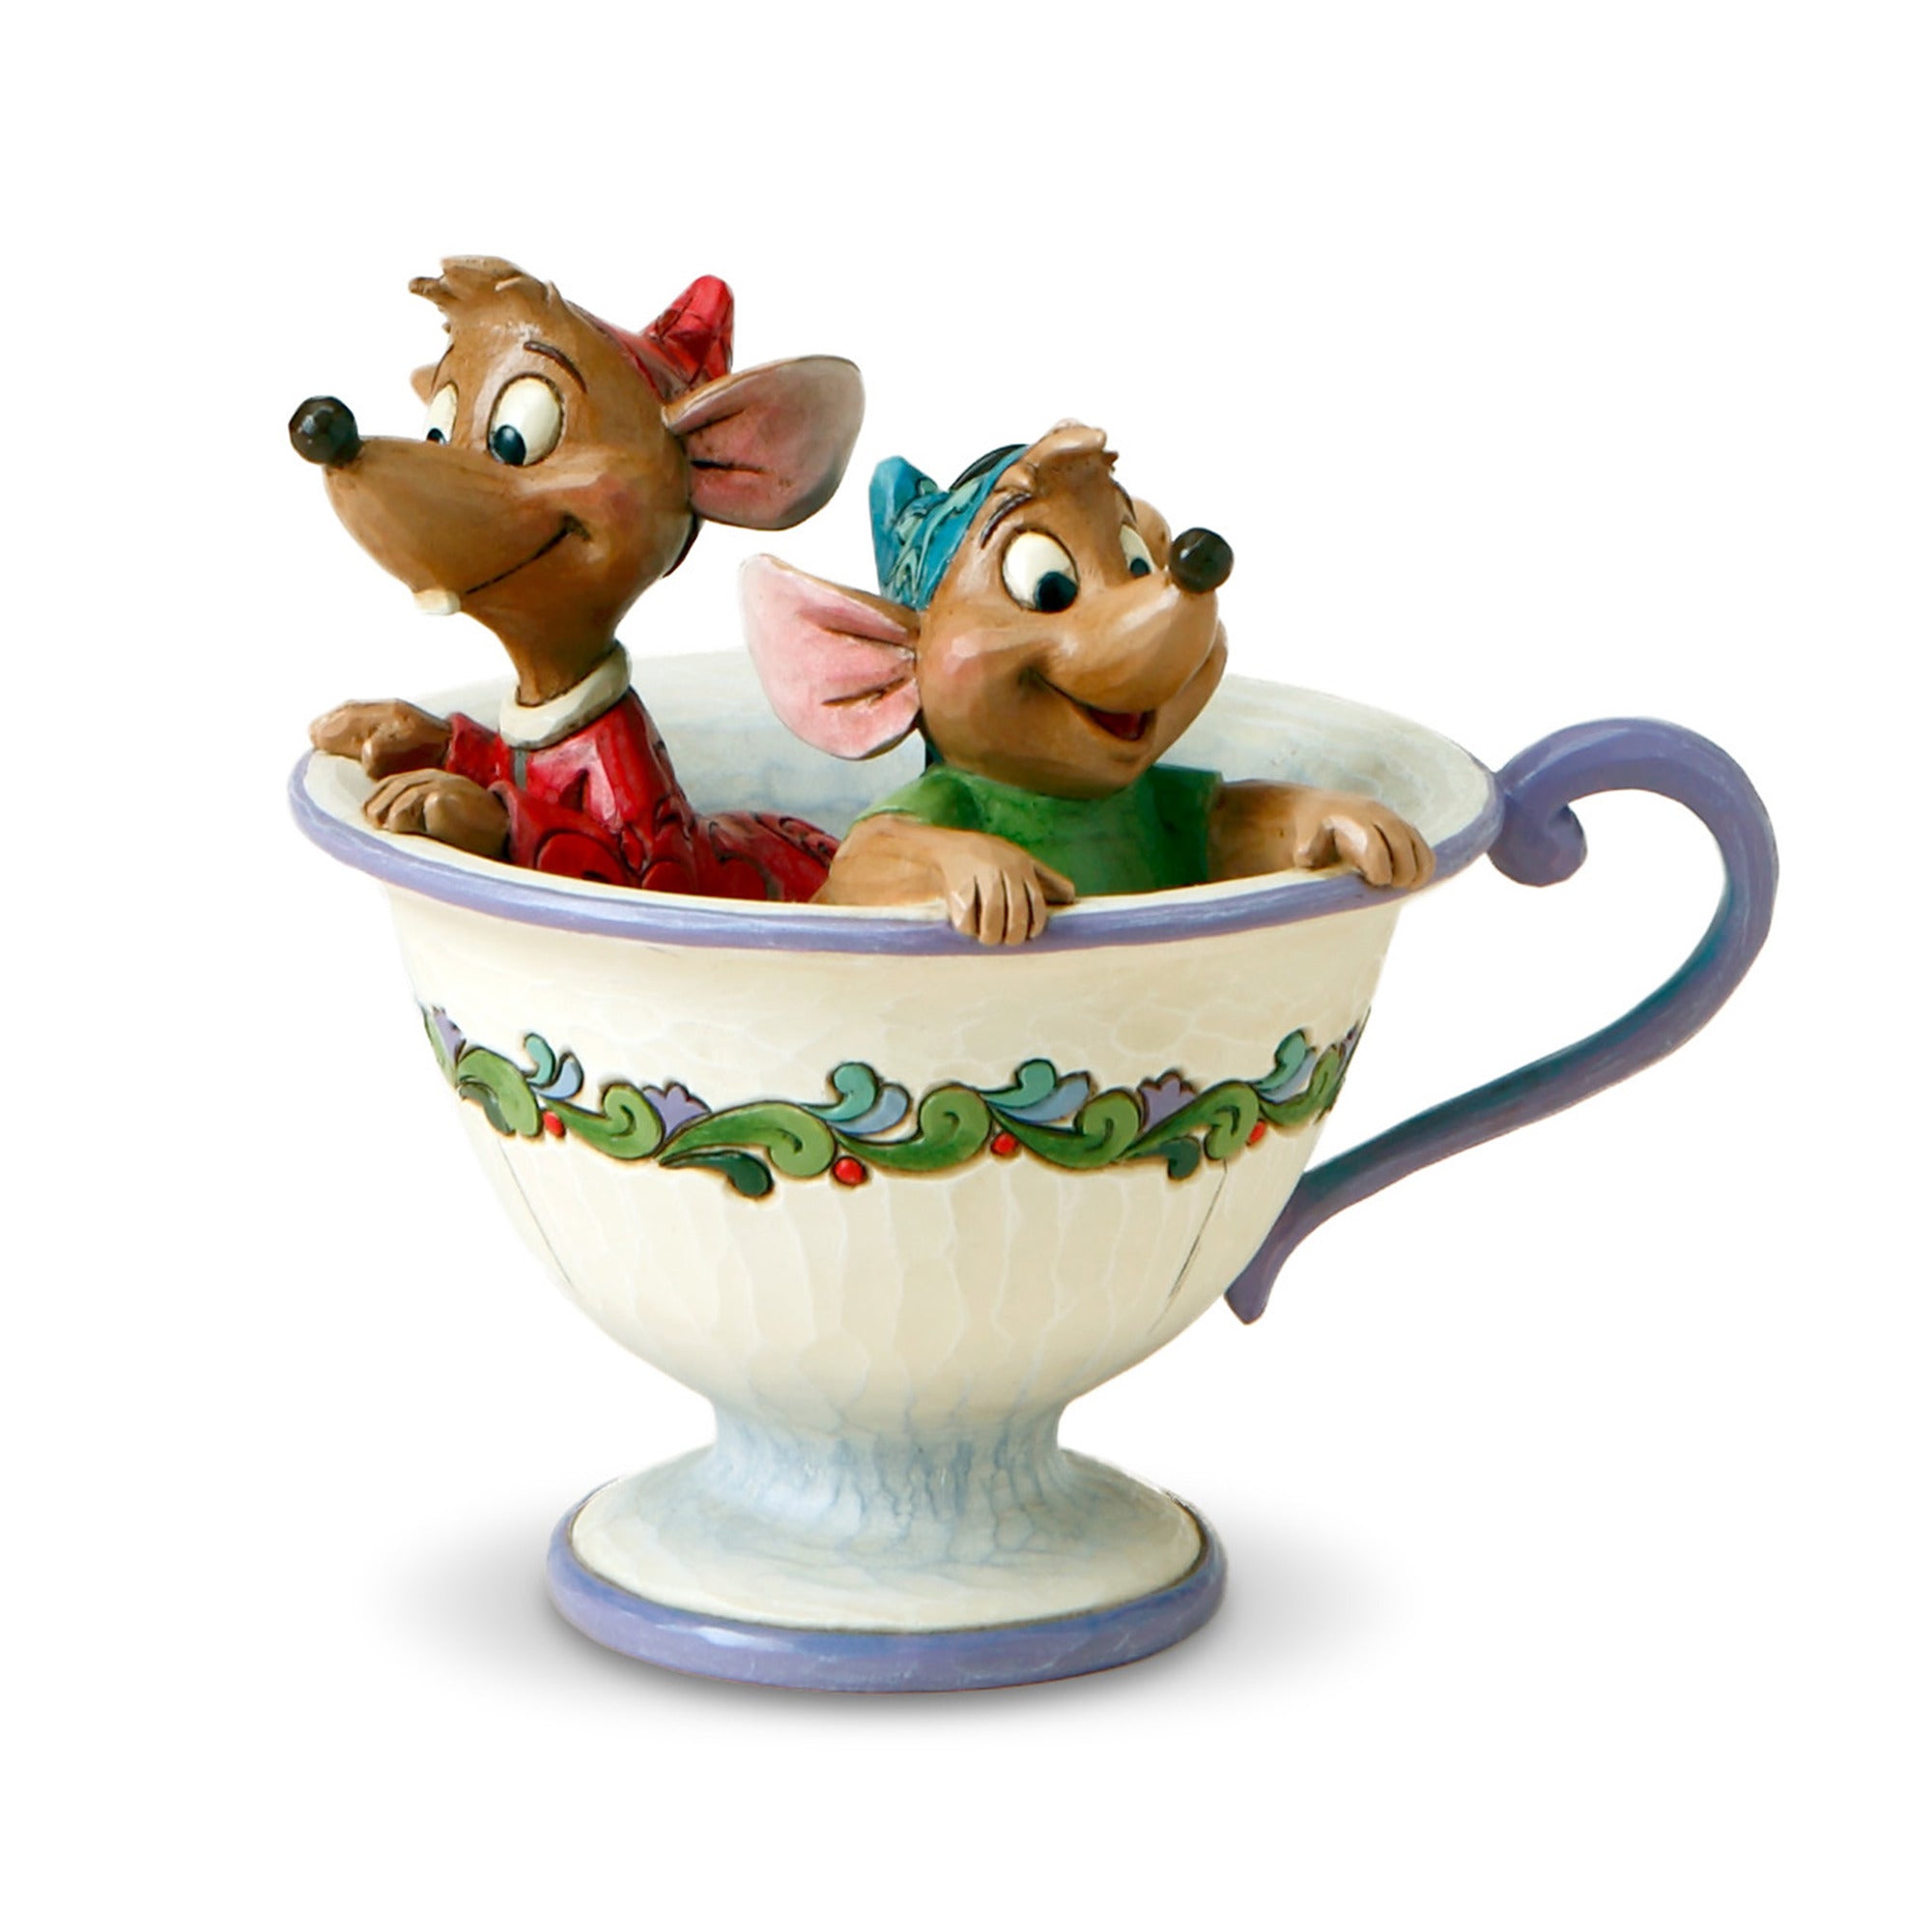 Cinderella - Jaq & Gus In Tea Cup